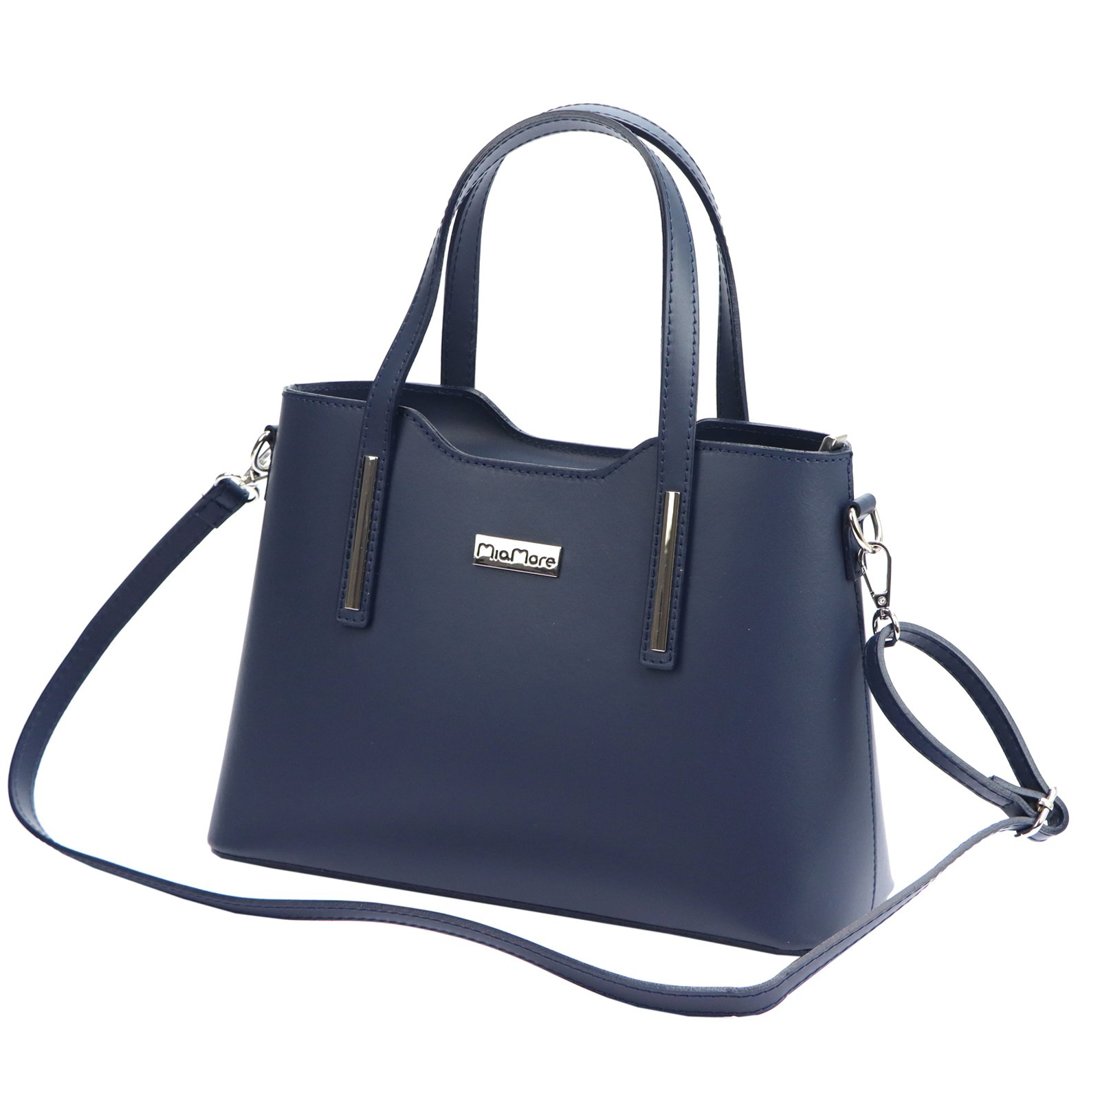 MiaMore women's leather handbag